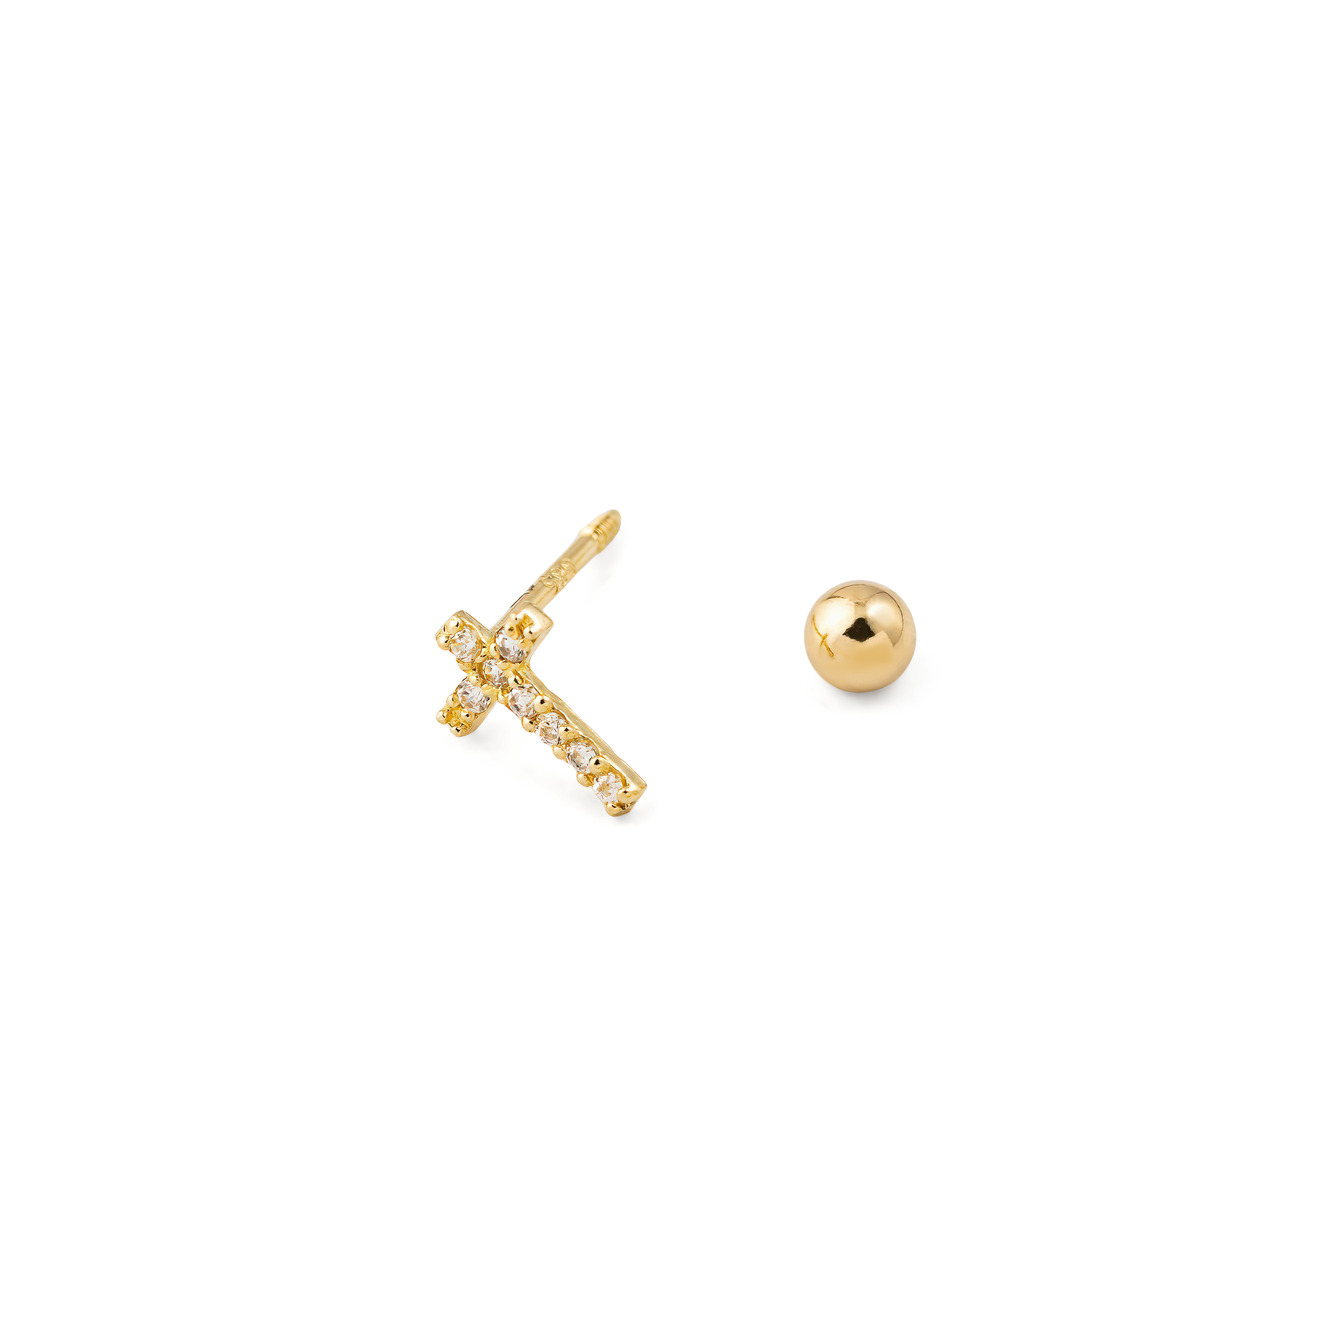 крест из золота 2 184 the jeweller 35.02 Штанга крест из золота с фианитами